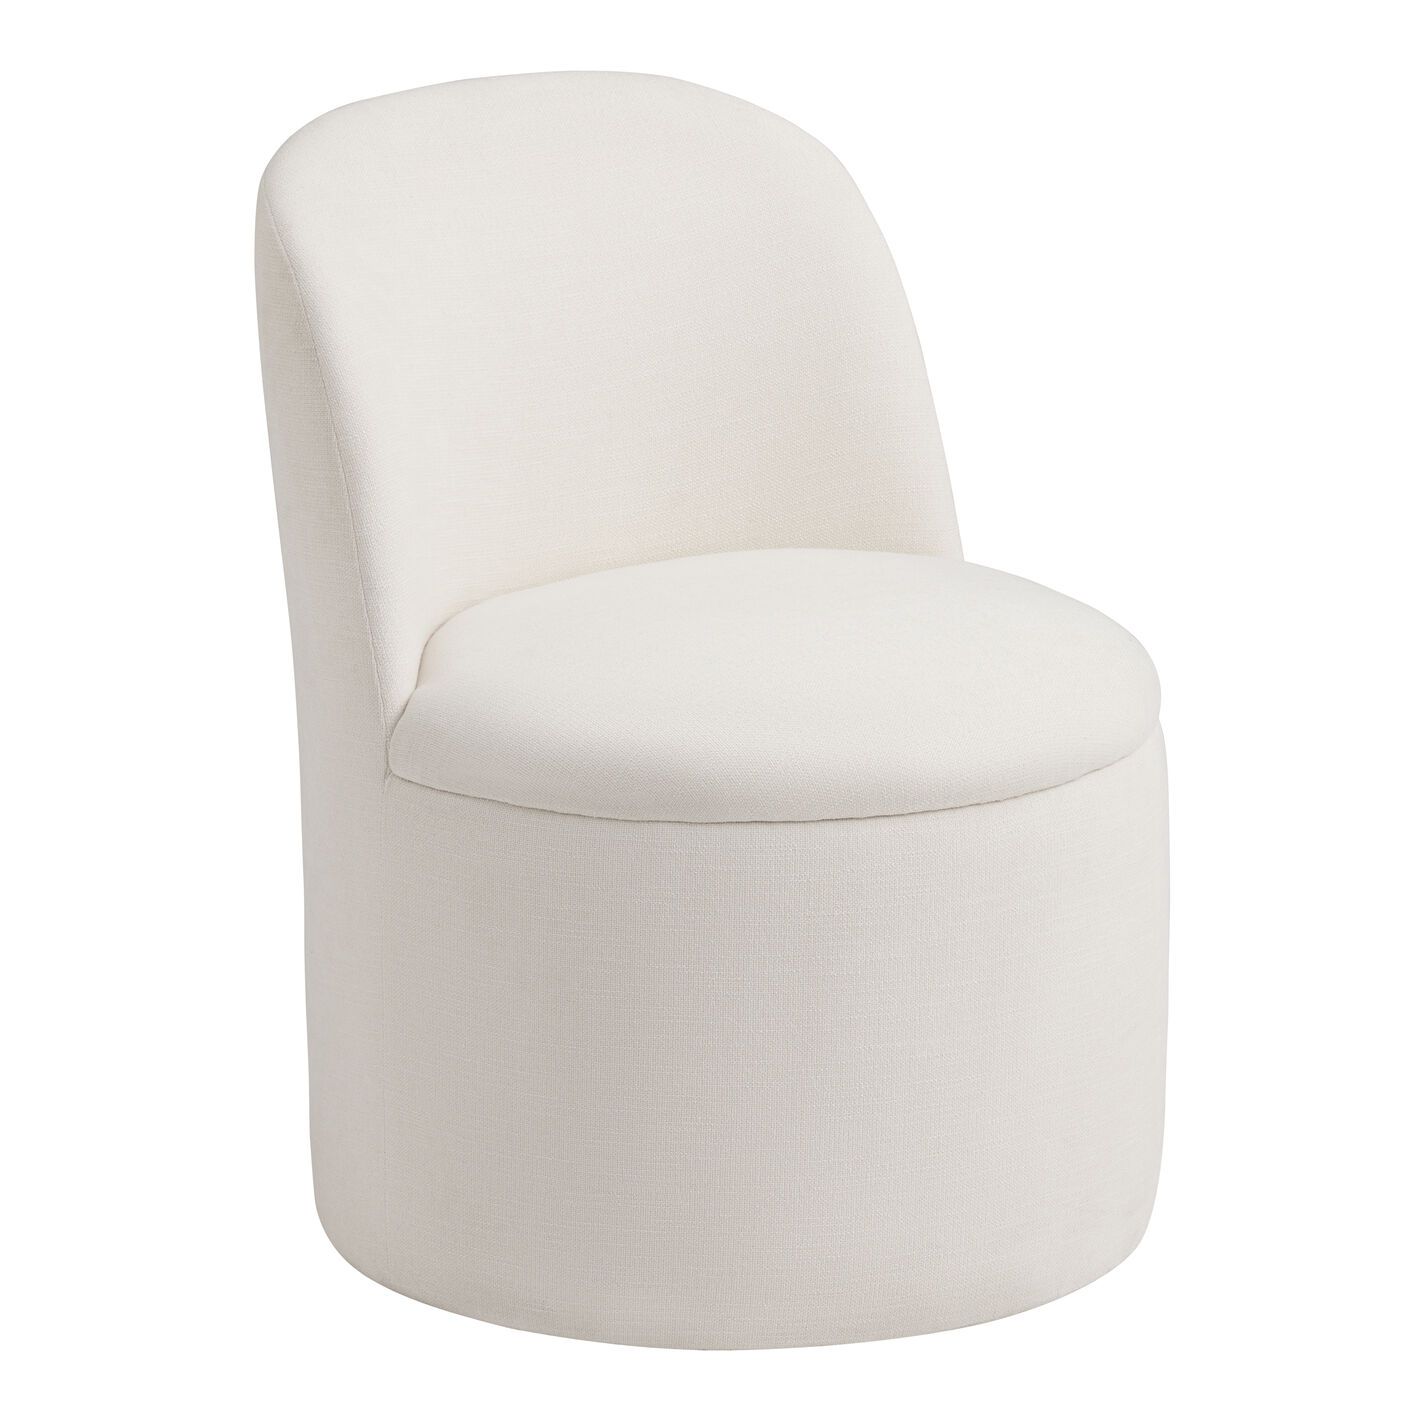 Mirah Round Upholstered Swivel Dining Chair | World Market